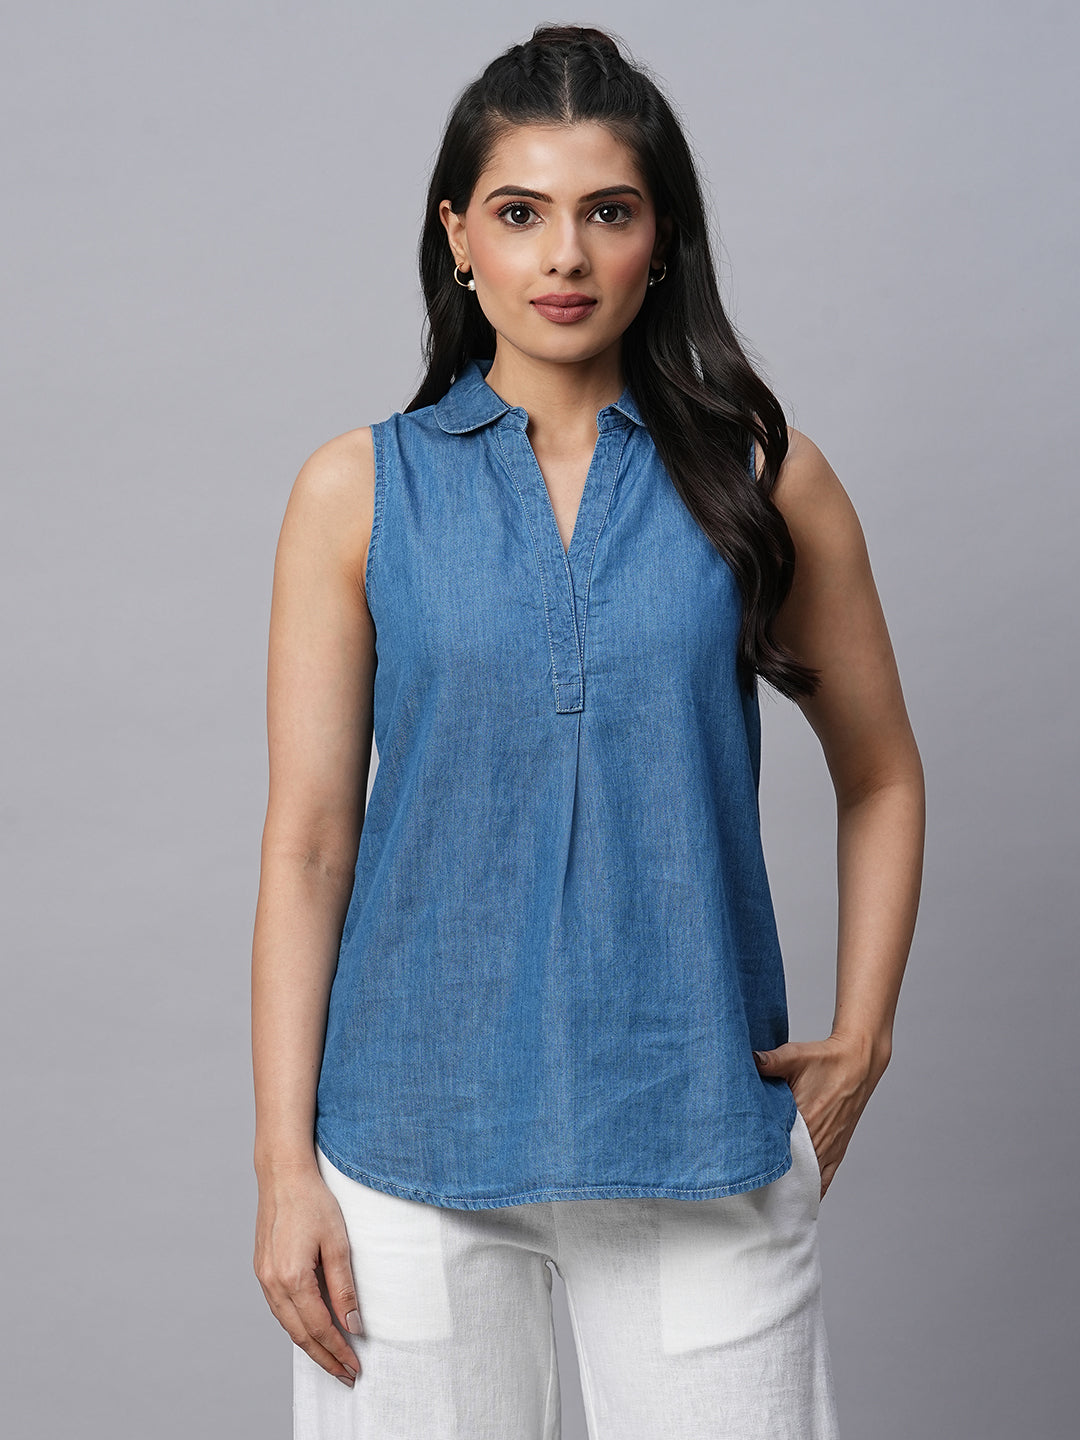 Designer Denim Shirt, Size: S ¿¿¿¿¿¿ XL at Rs 421/piece in New Delhi | ID:  13661736730